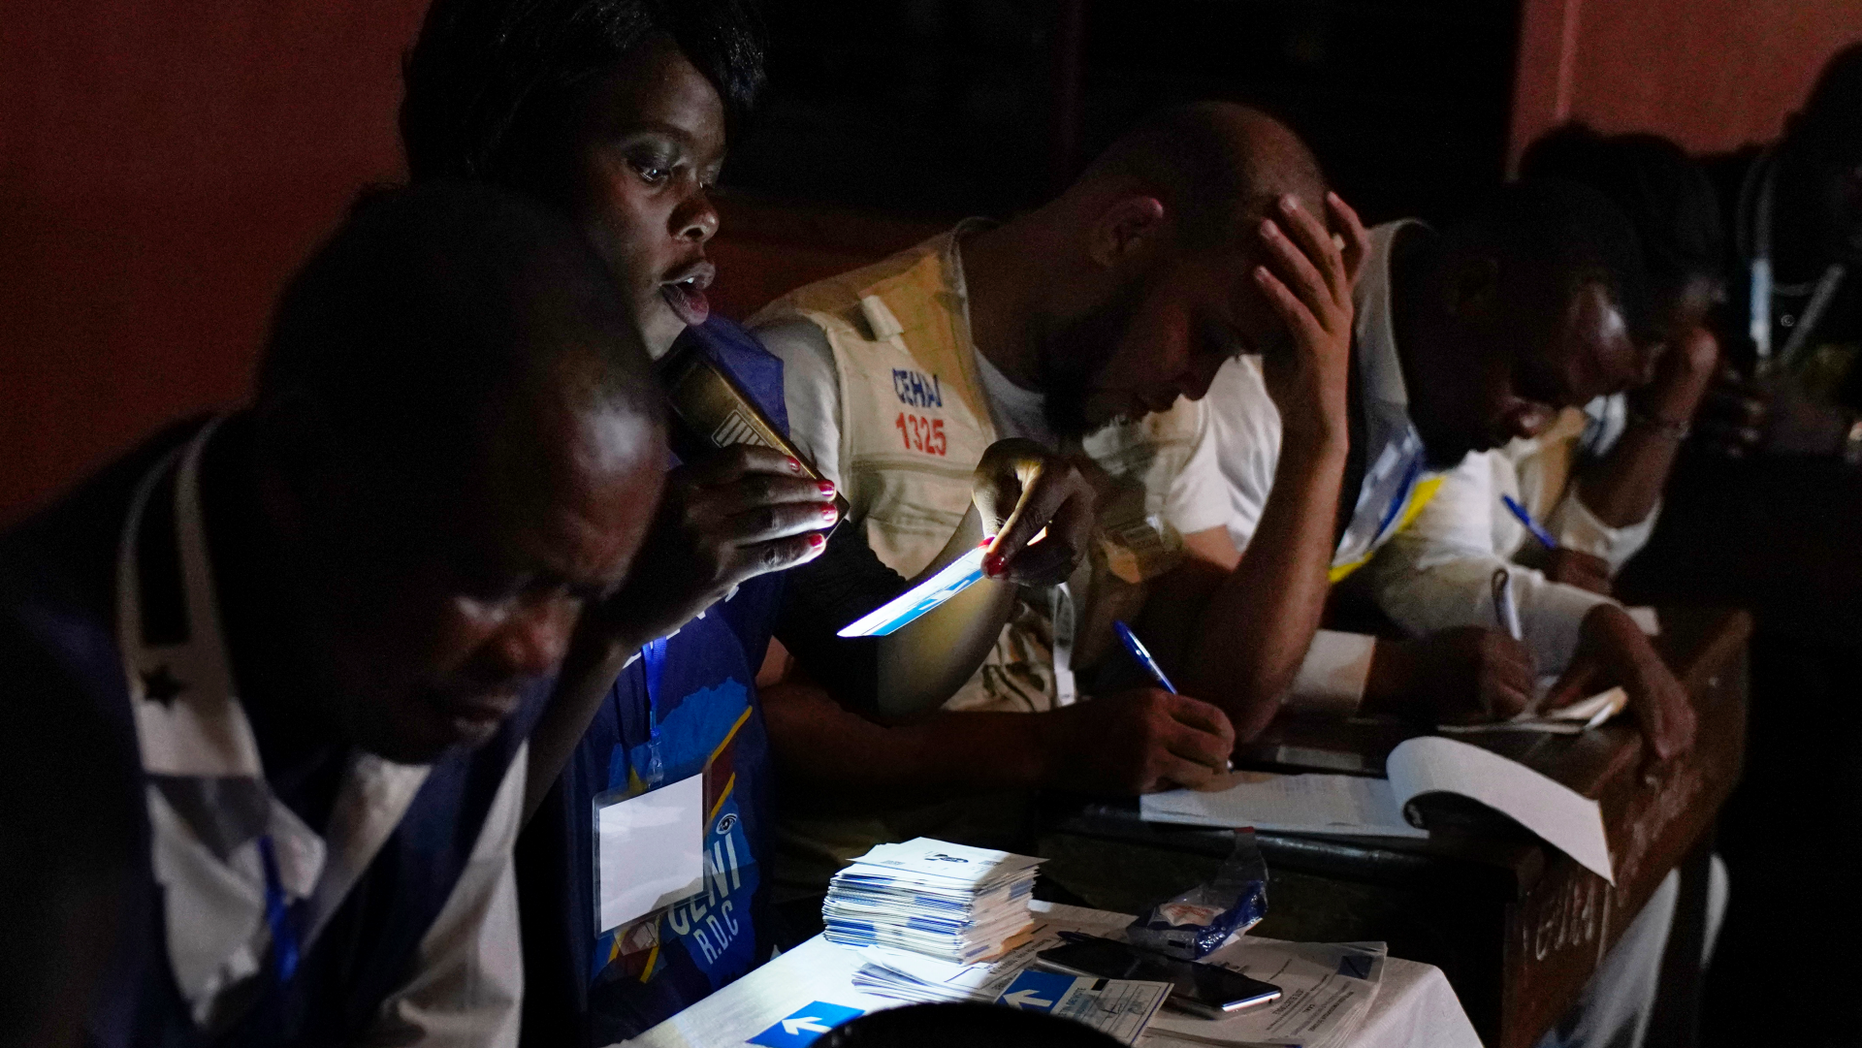 Congo counts votes in presidential election, after delays